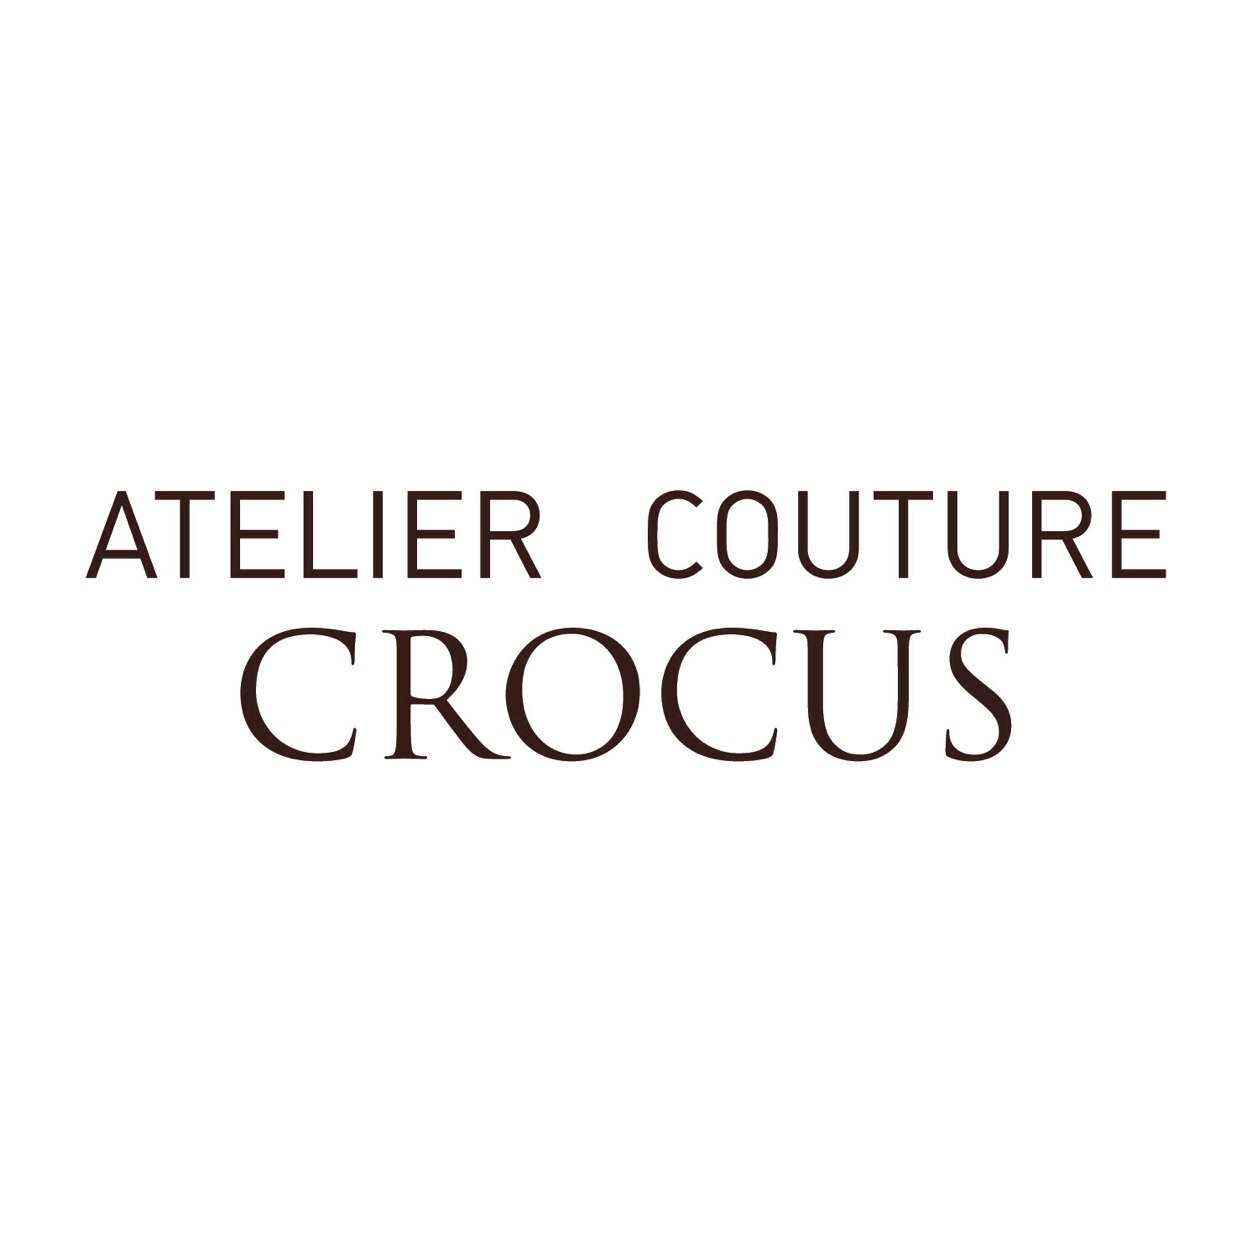 Crocus Atelier